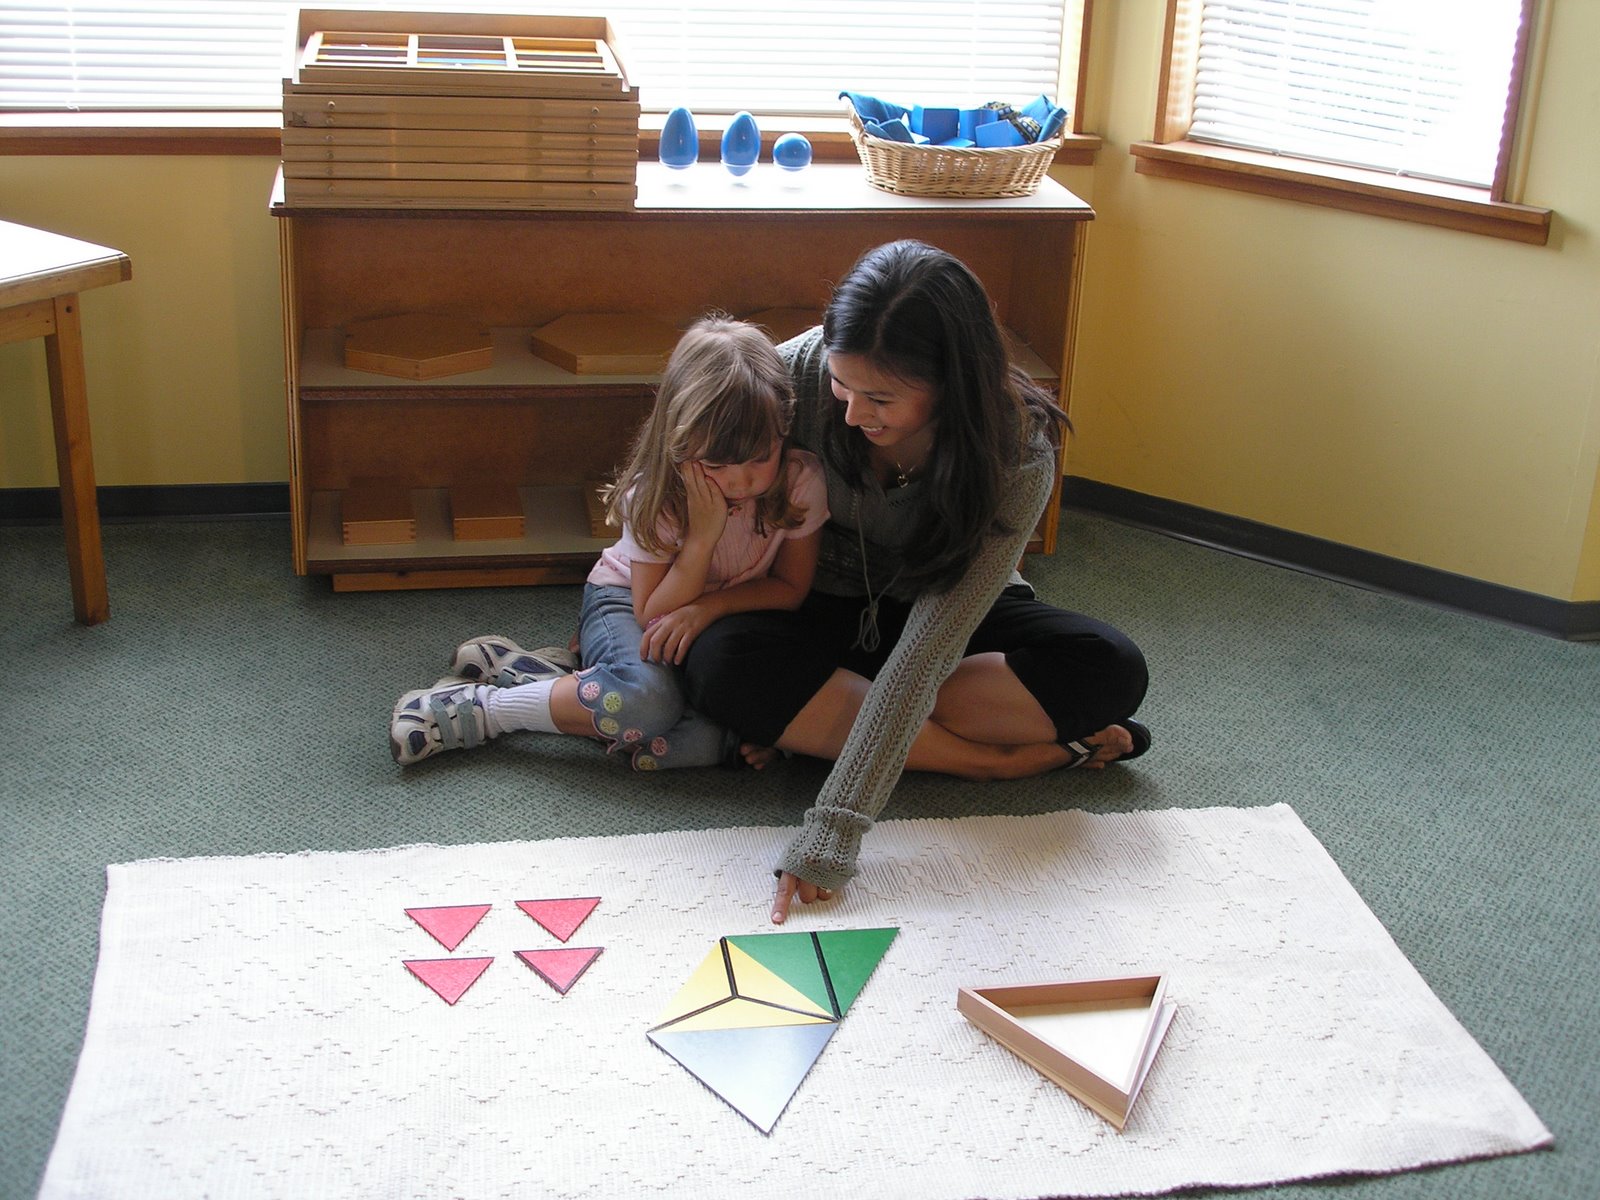 Gluing Redirecting Behavior NAMC Montessori Classroom Working Towards Normalization teacher and girl